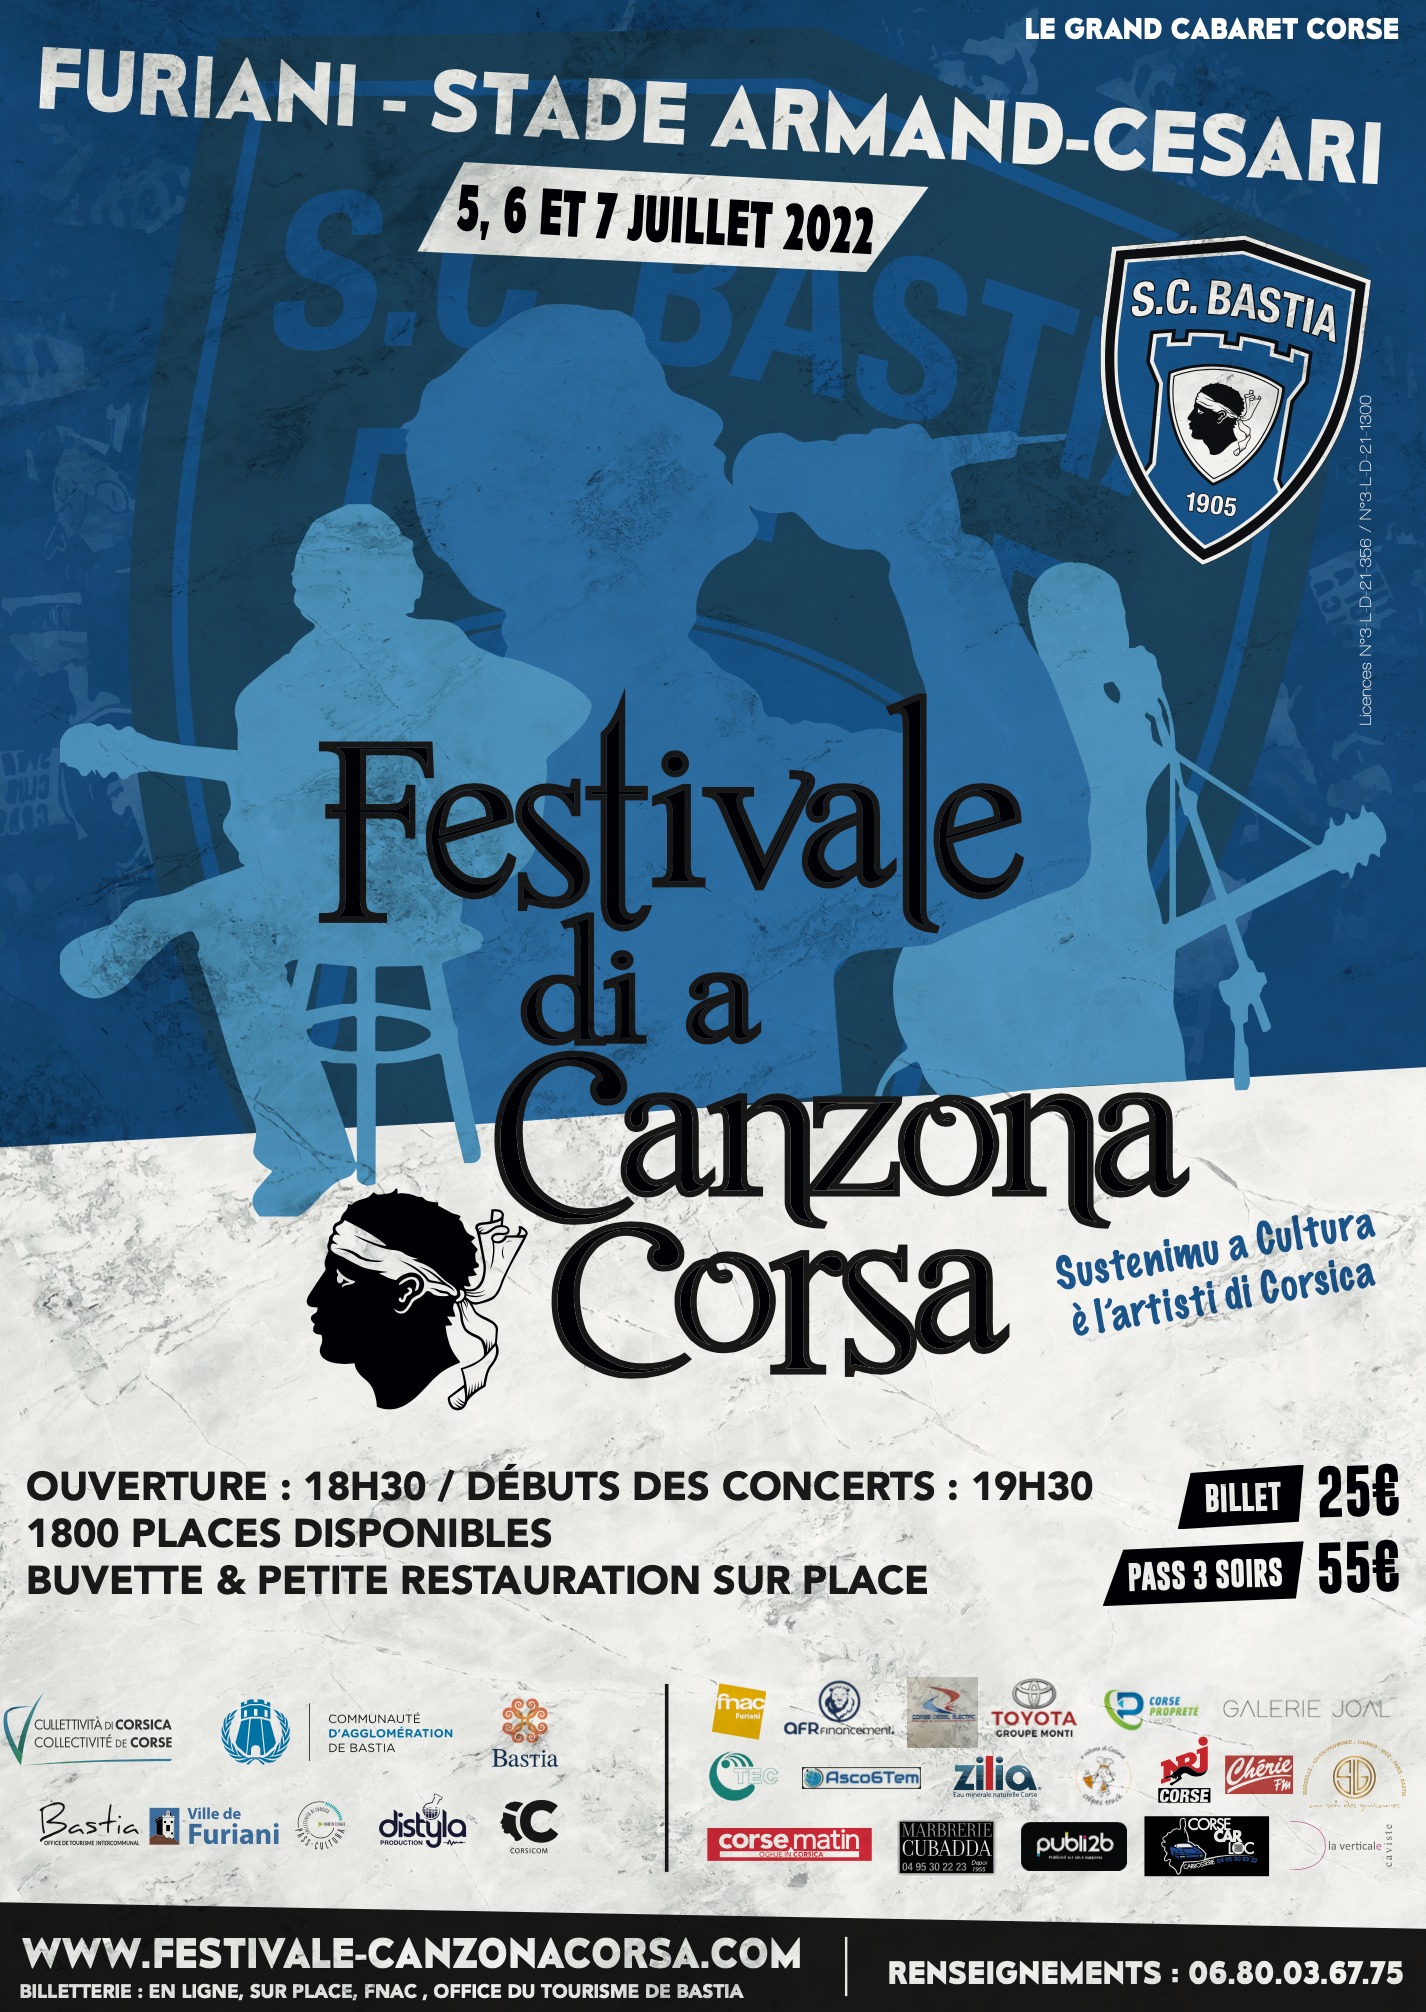 Festivale di a canzona corsa : coup d’envoi le 5 juillet à Furiani